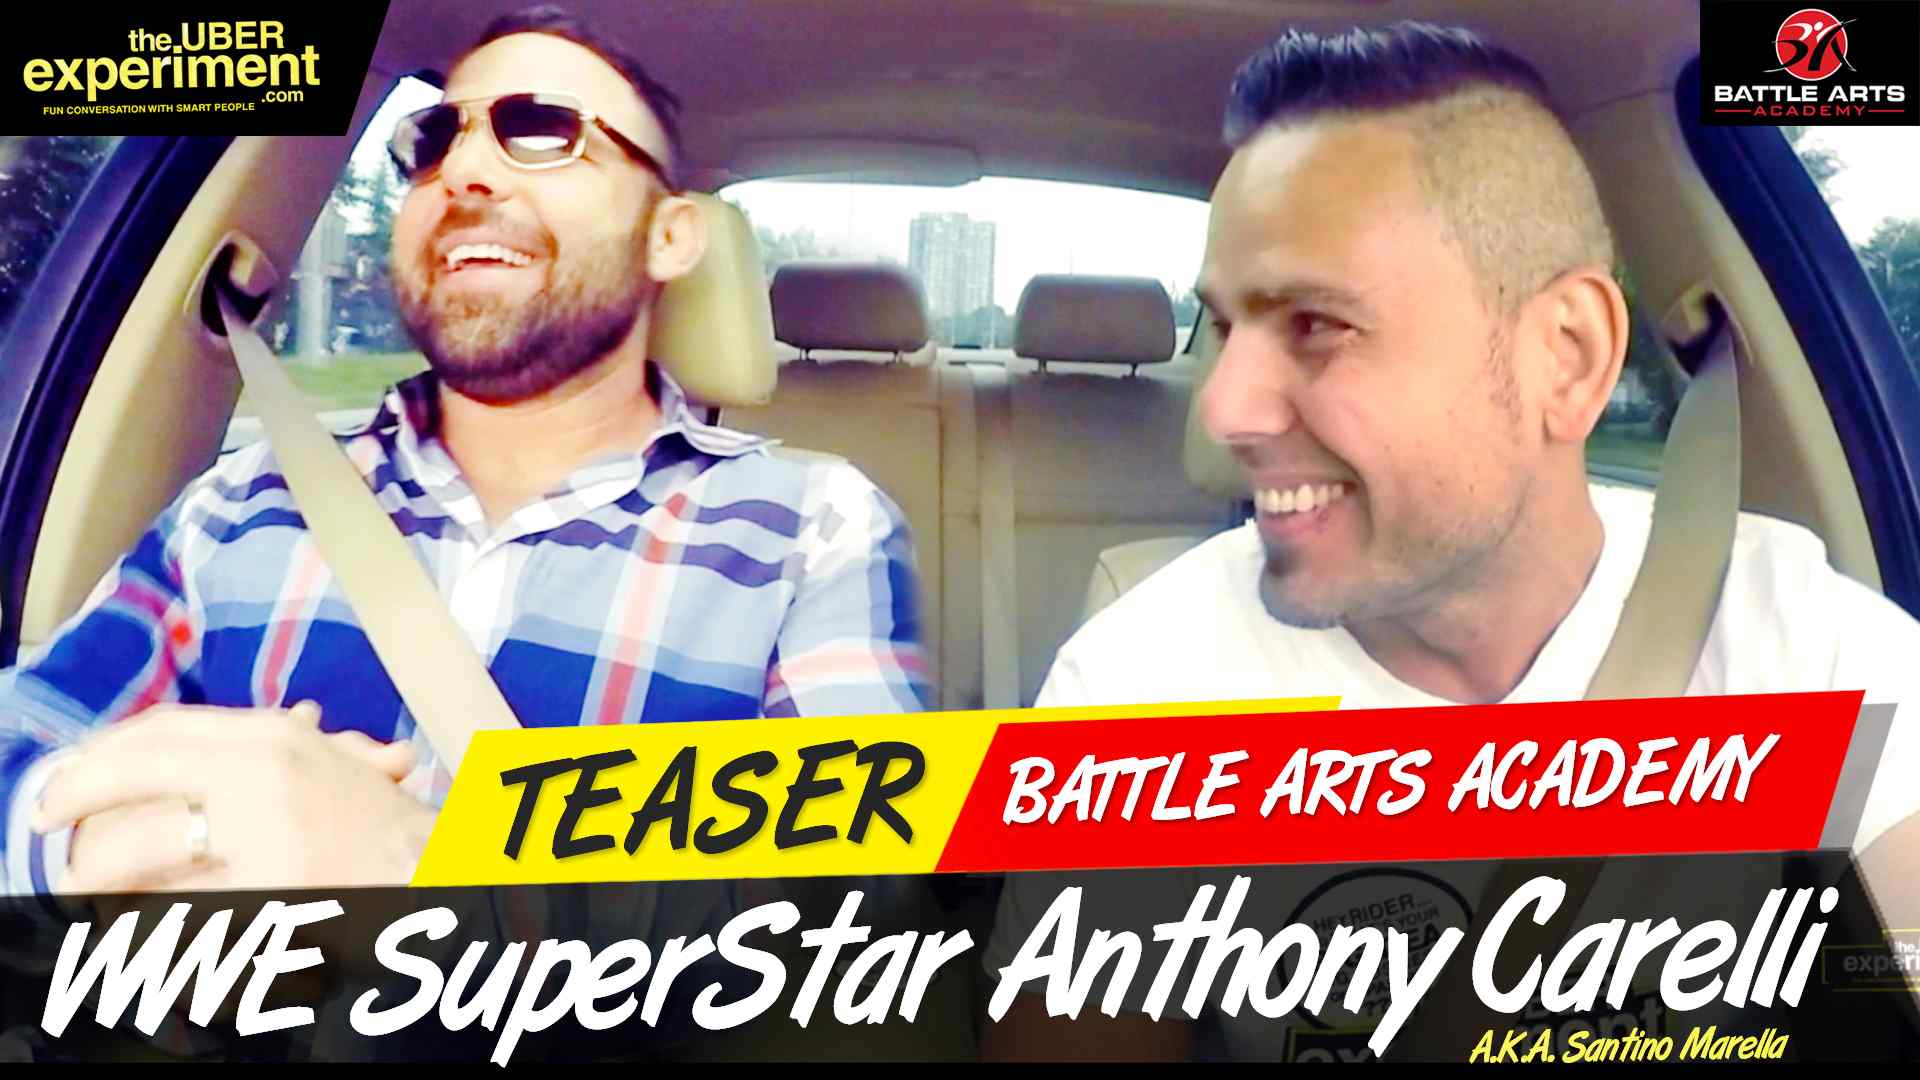 BATTLE ARTS ACADEMY- WWE Superstar Wrestler Anthony Carelli (Santino Marella) on The Uber Experiment